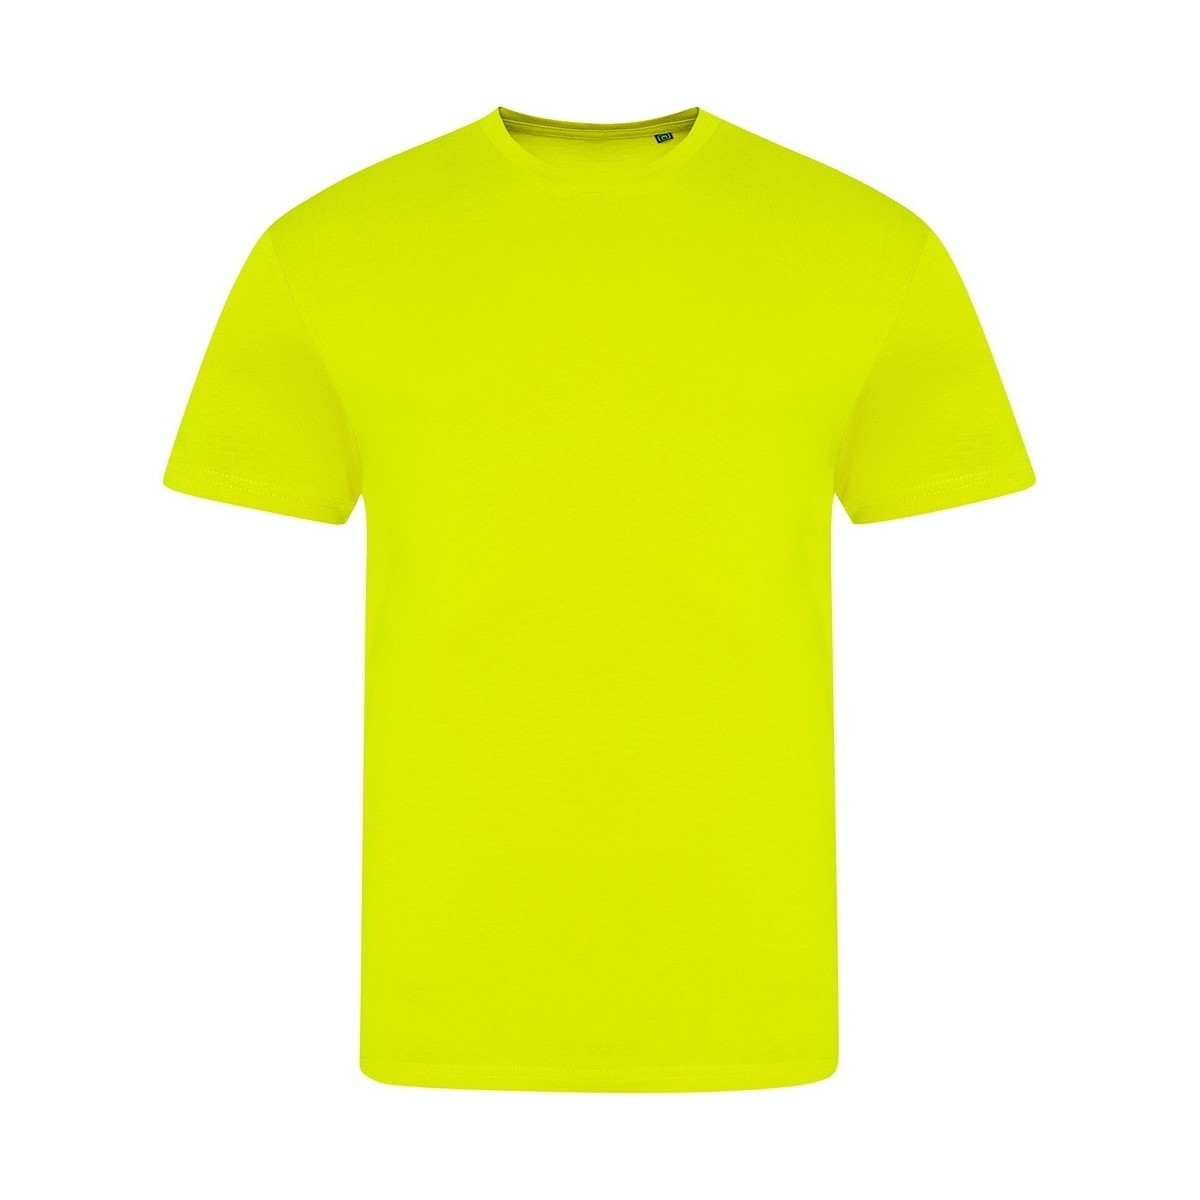 textil Camisetas manga larga Awdis Electric Tri-Blend Multicolor